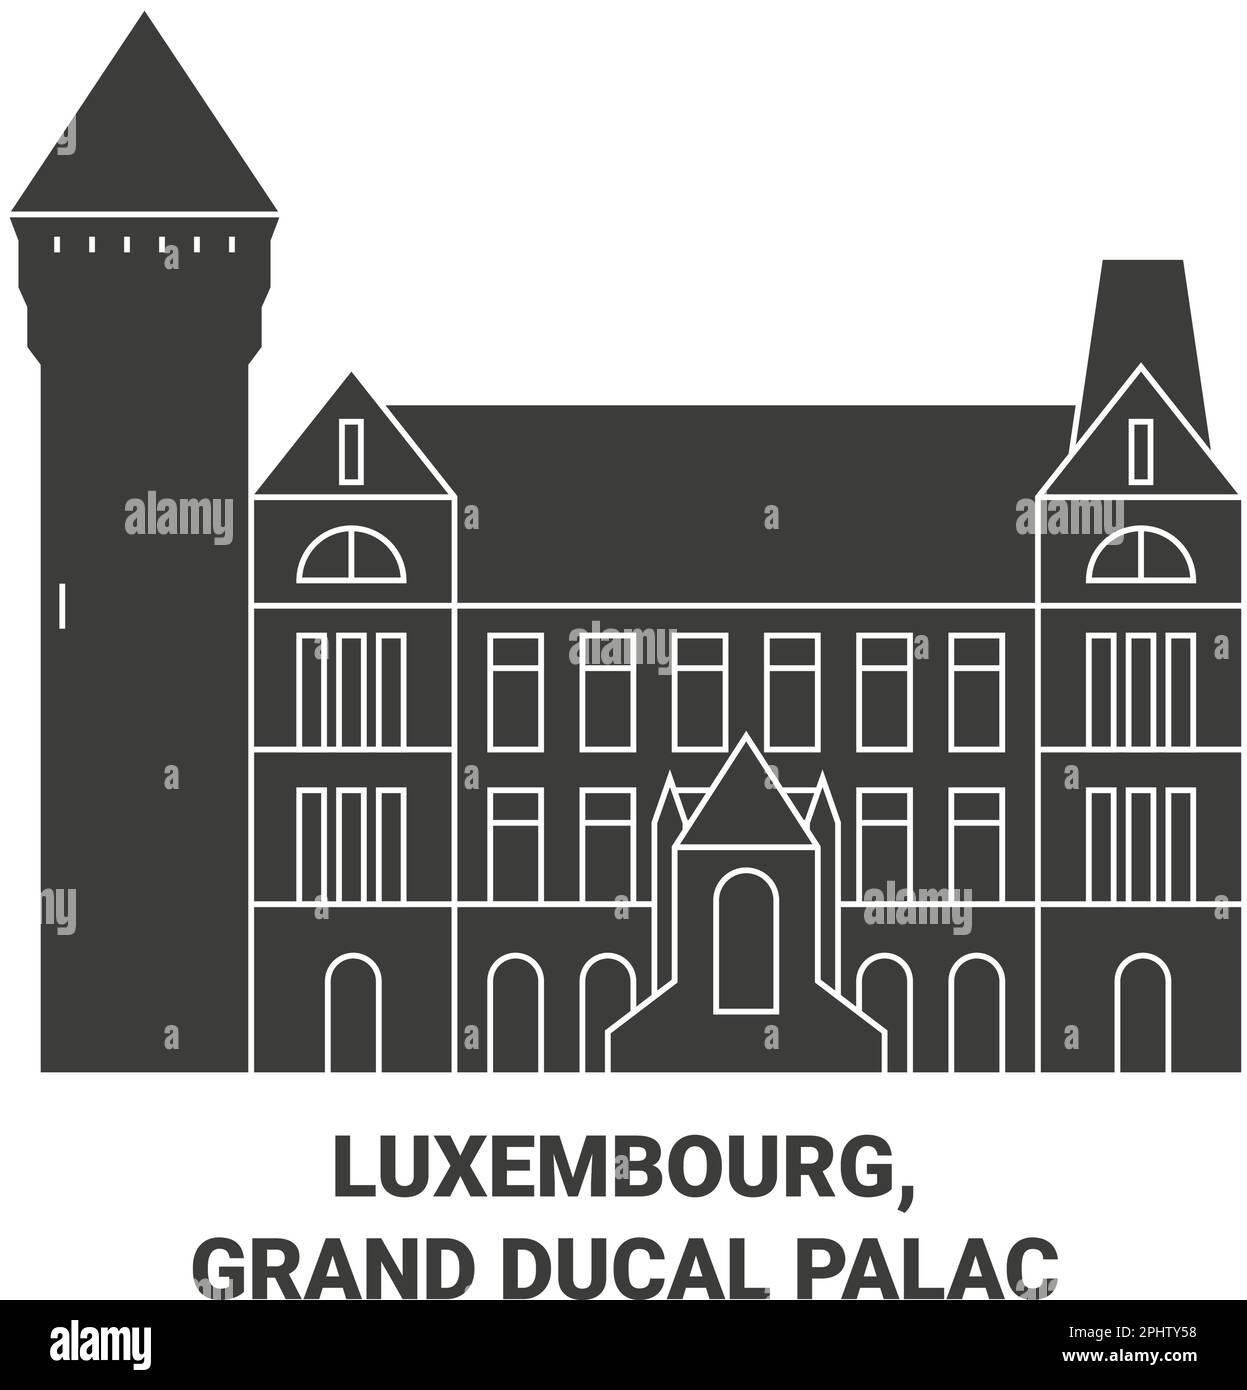 Luxembourg, Grand Ducal Palac travel landmark vector illustration Stock Vector